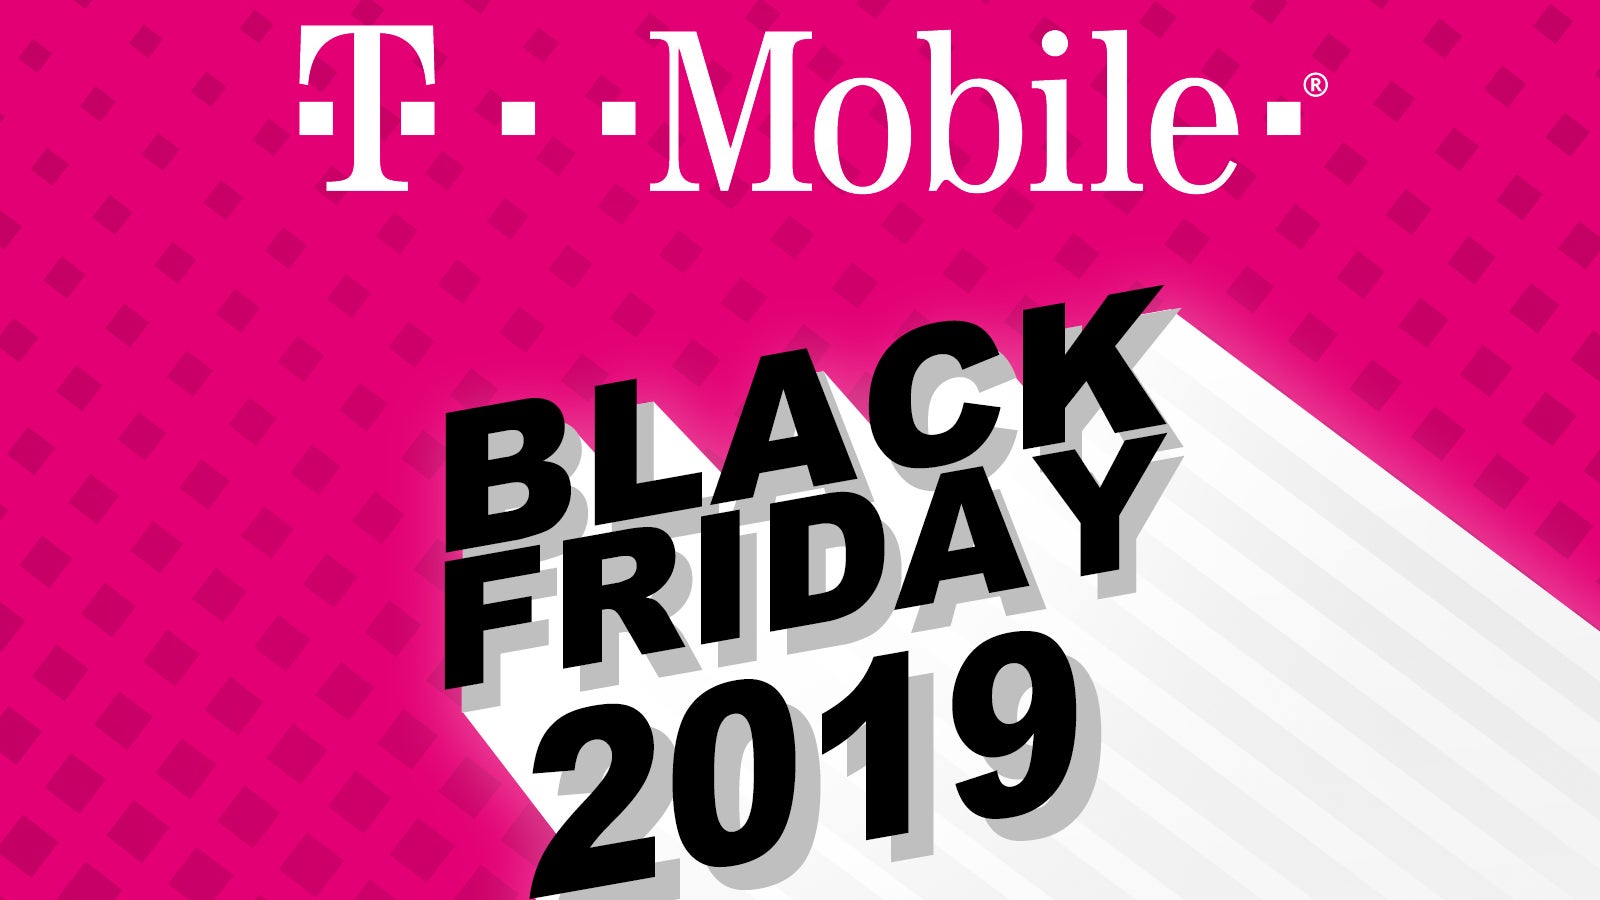 TMobile Black Friday 2019 deals PhoneArena